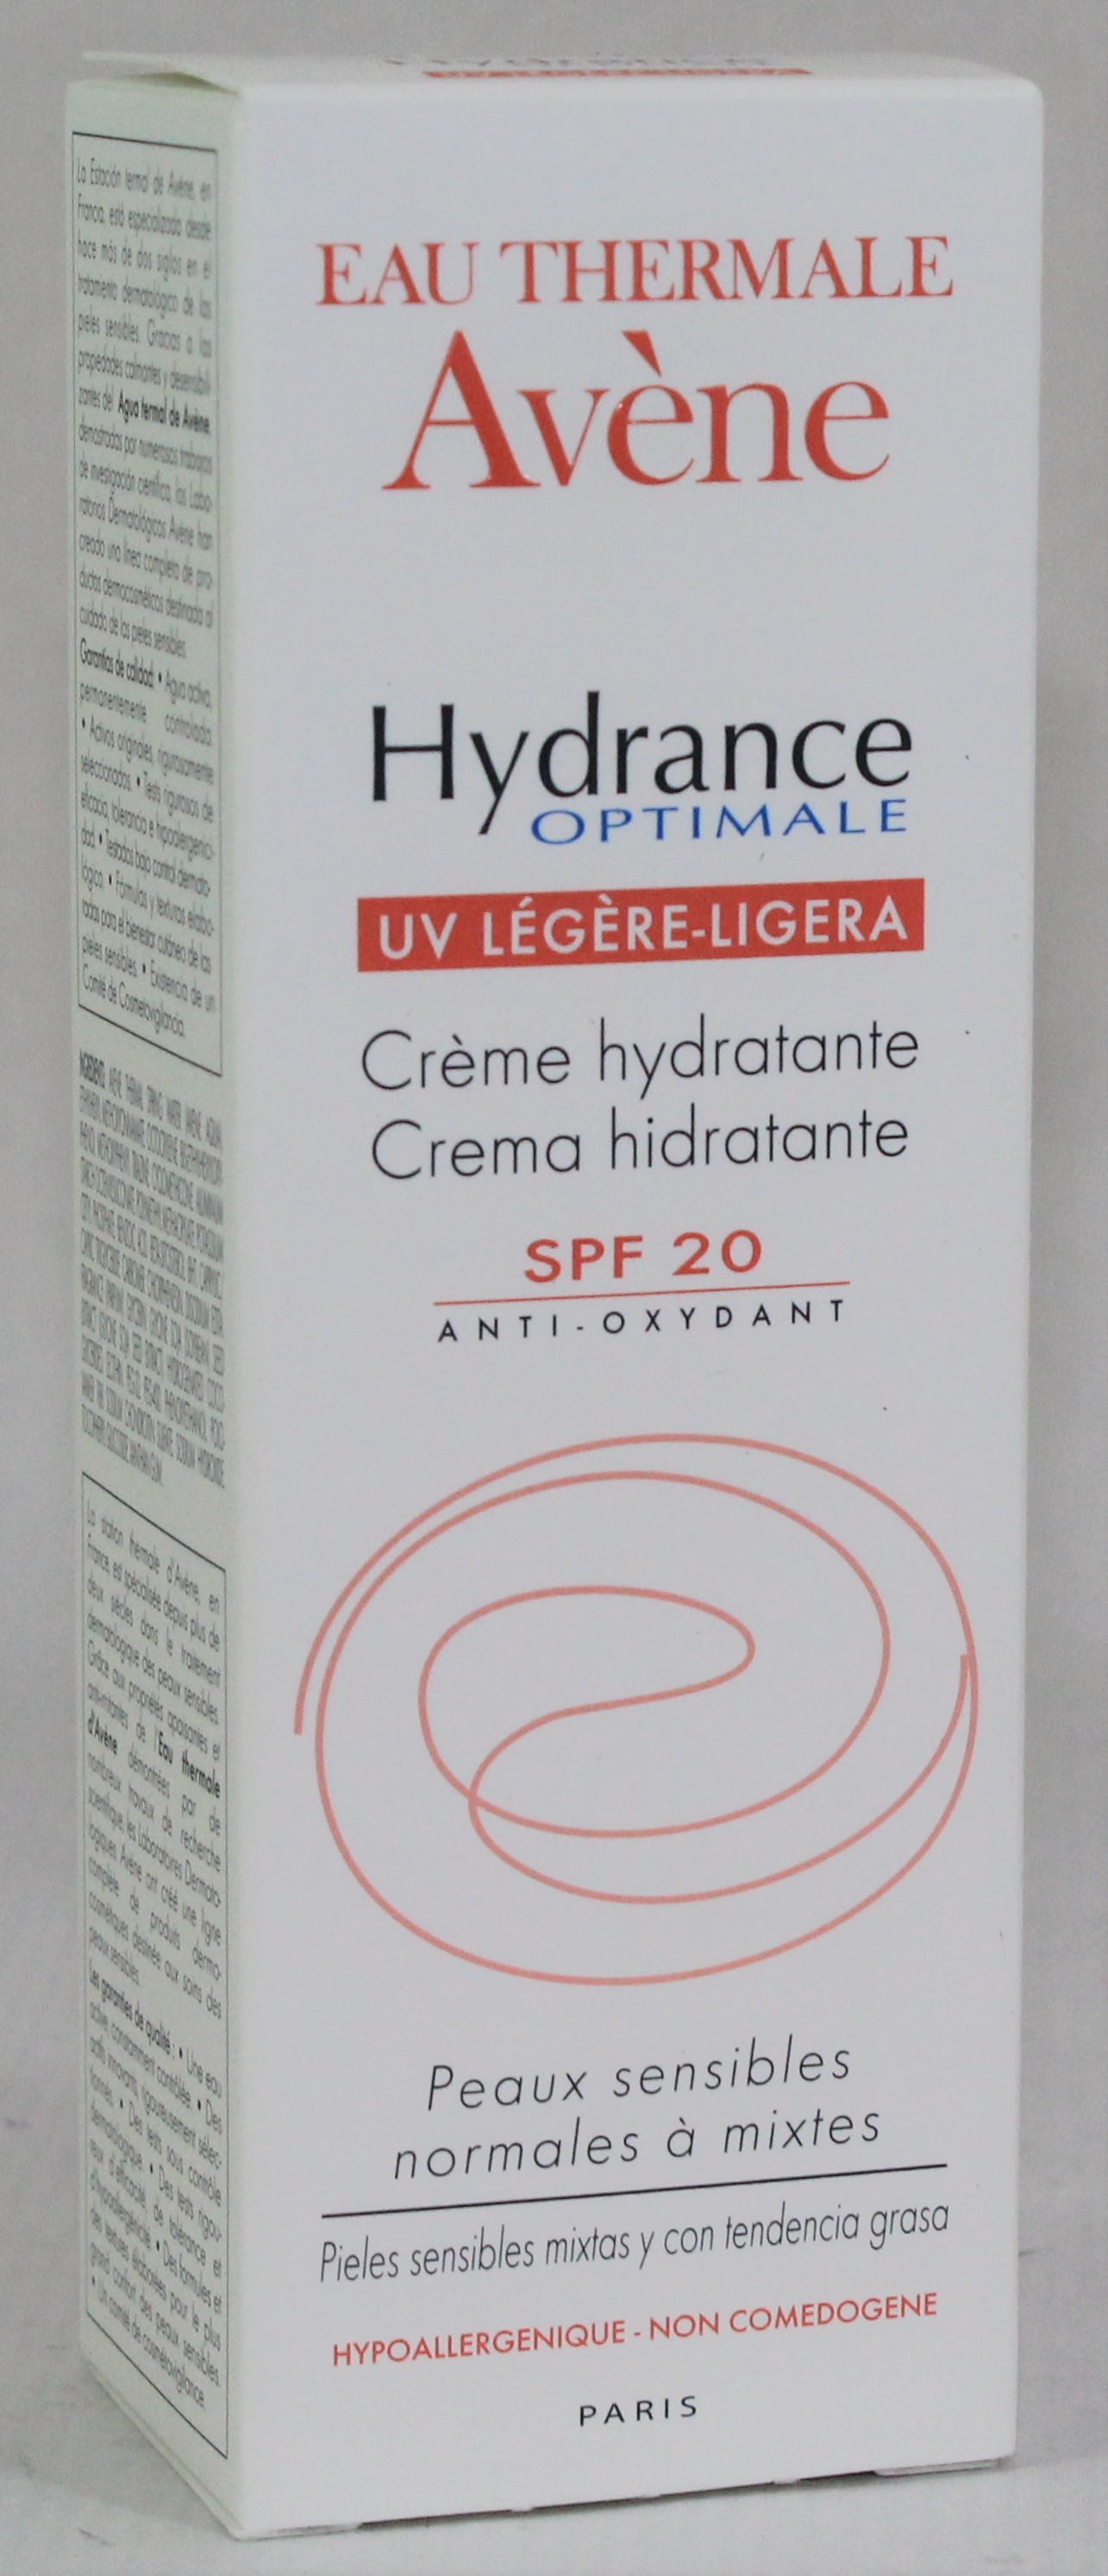 AVENE HYDRANCE LIGERA UV SPF 30 40 ML + REGALO